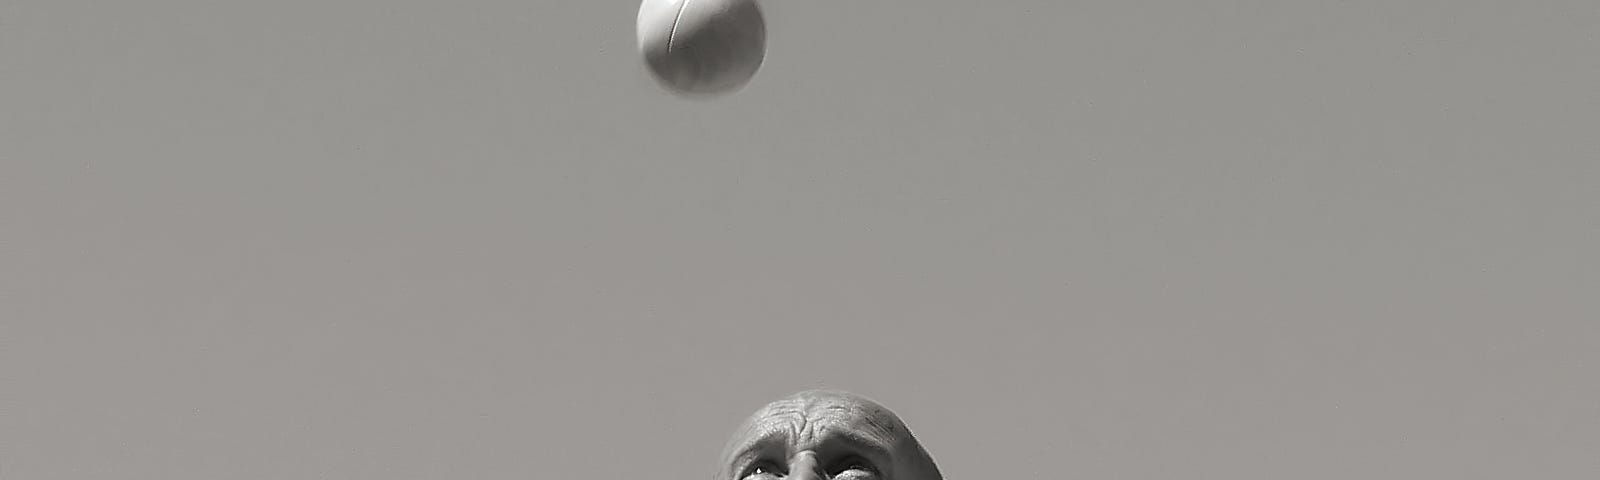 A man juggling multiple balls